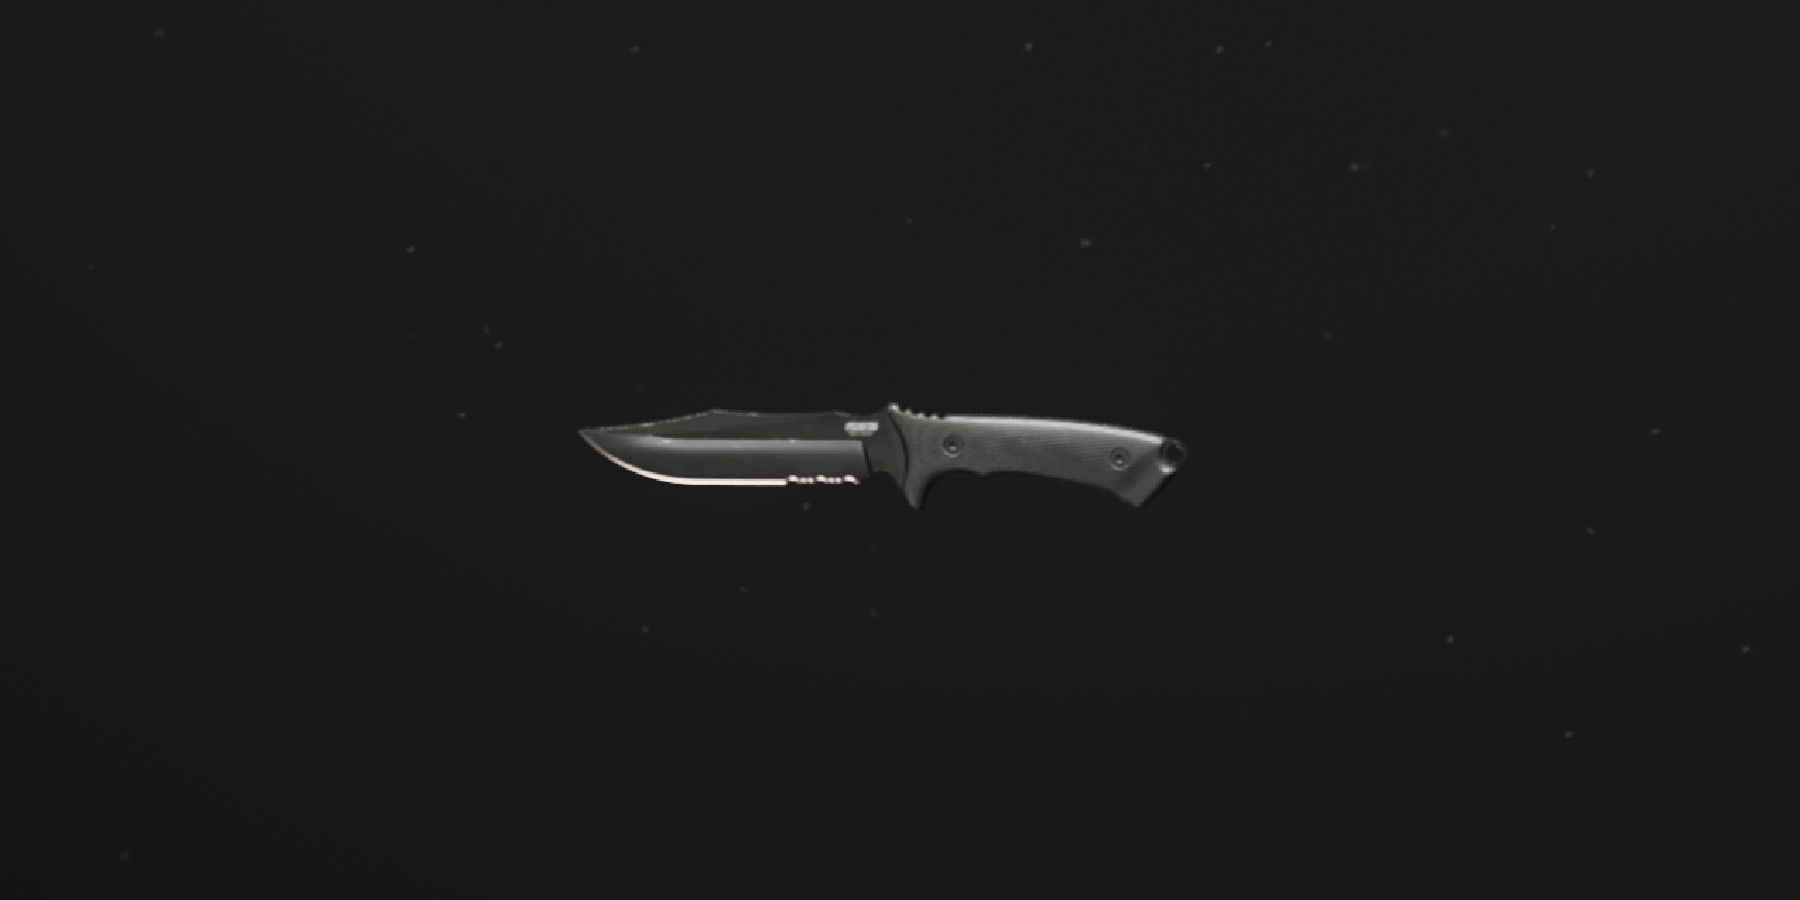 mw3 - weapon camos - combat knife